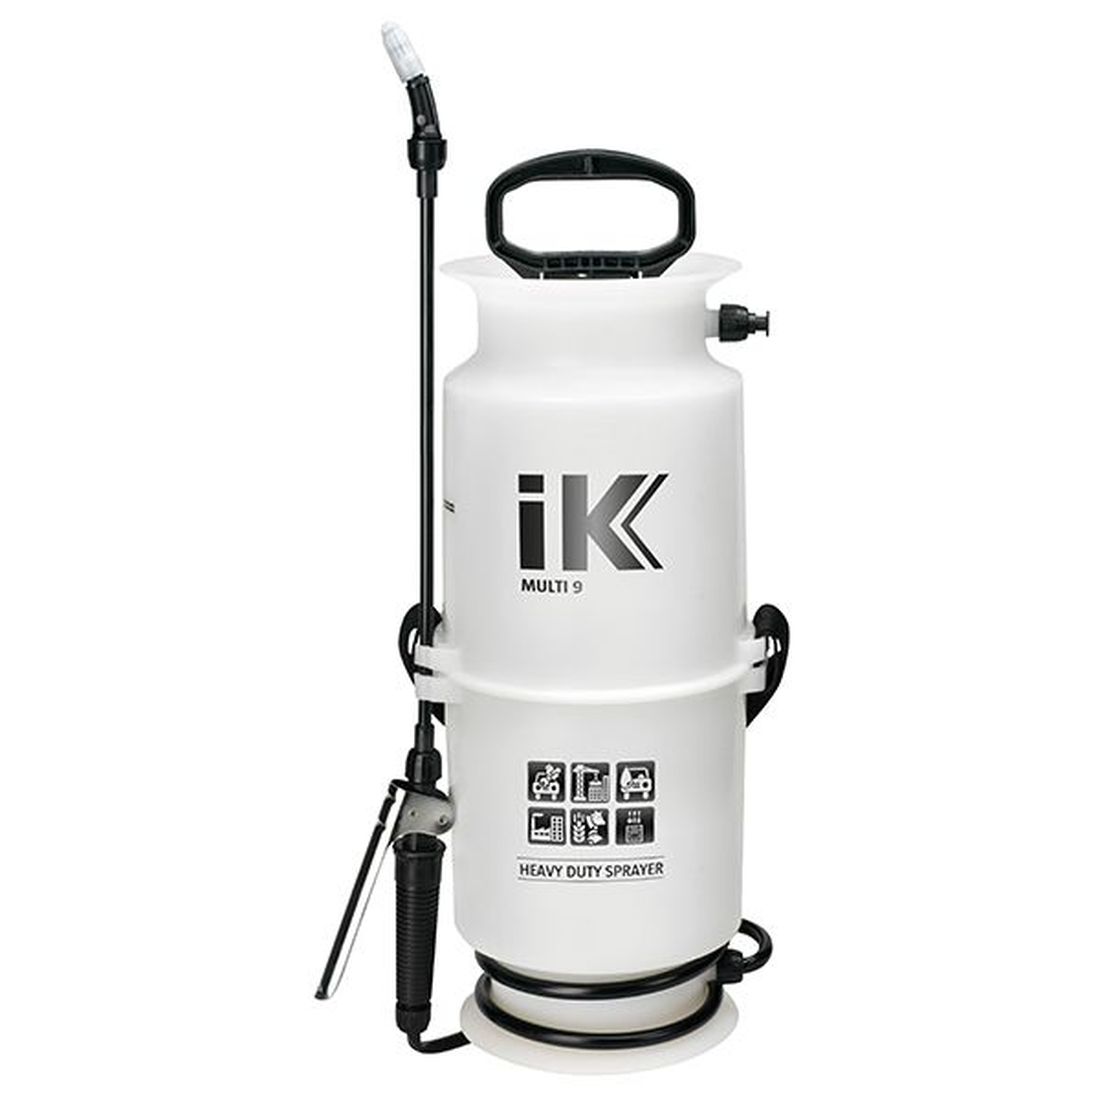 Matabi IK Multi 9 Industrial Sprayer 6 litre                                           